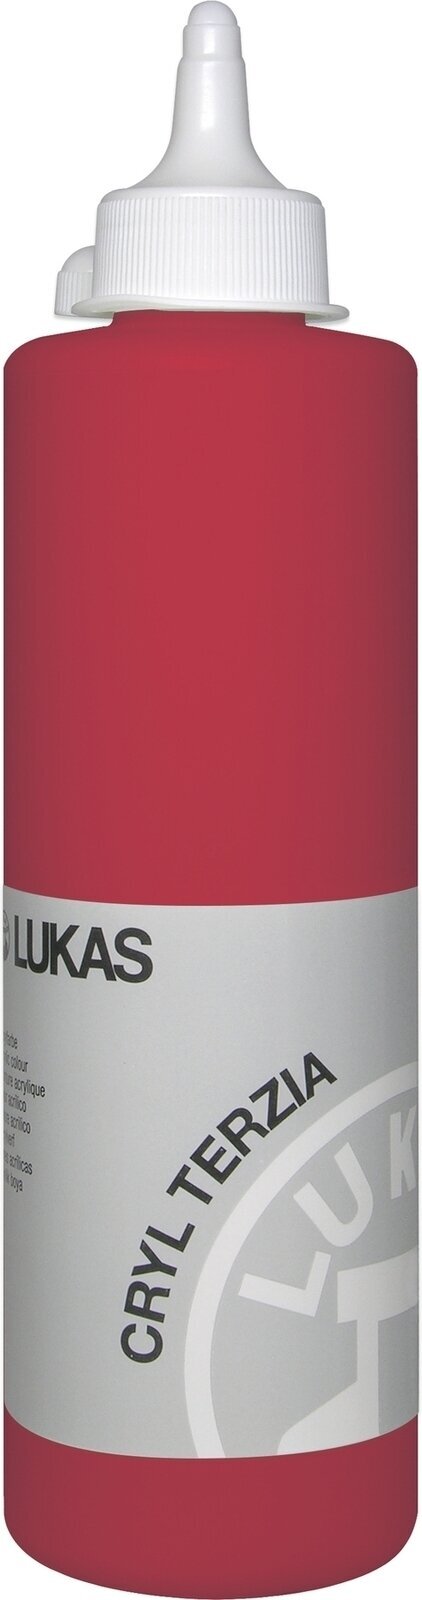 Acrylfarbe Lukas Cryl Terzia Acrylfarbe 500 ml Cadmium Red Deep Hue